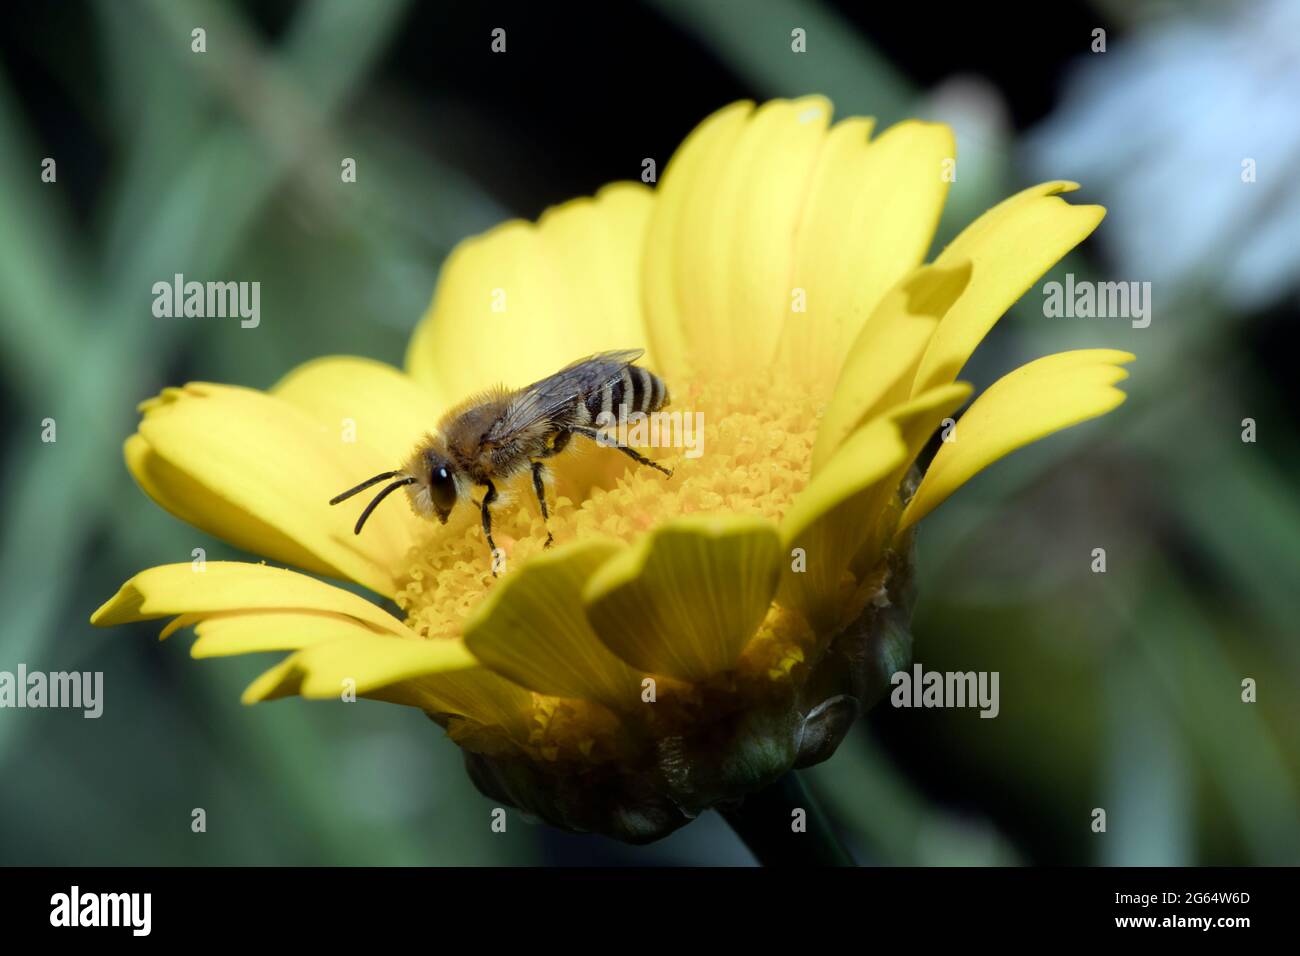 Honeybee on a yellow blossom Stock Photo